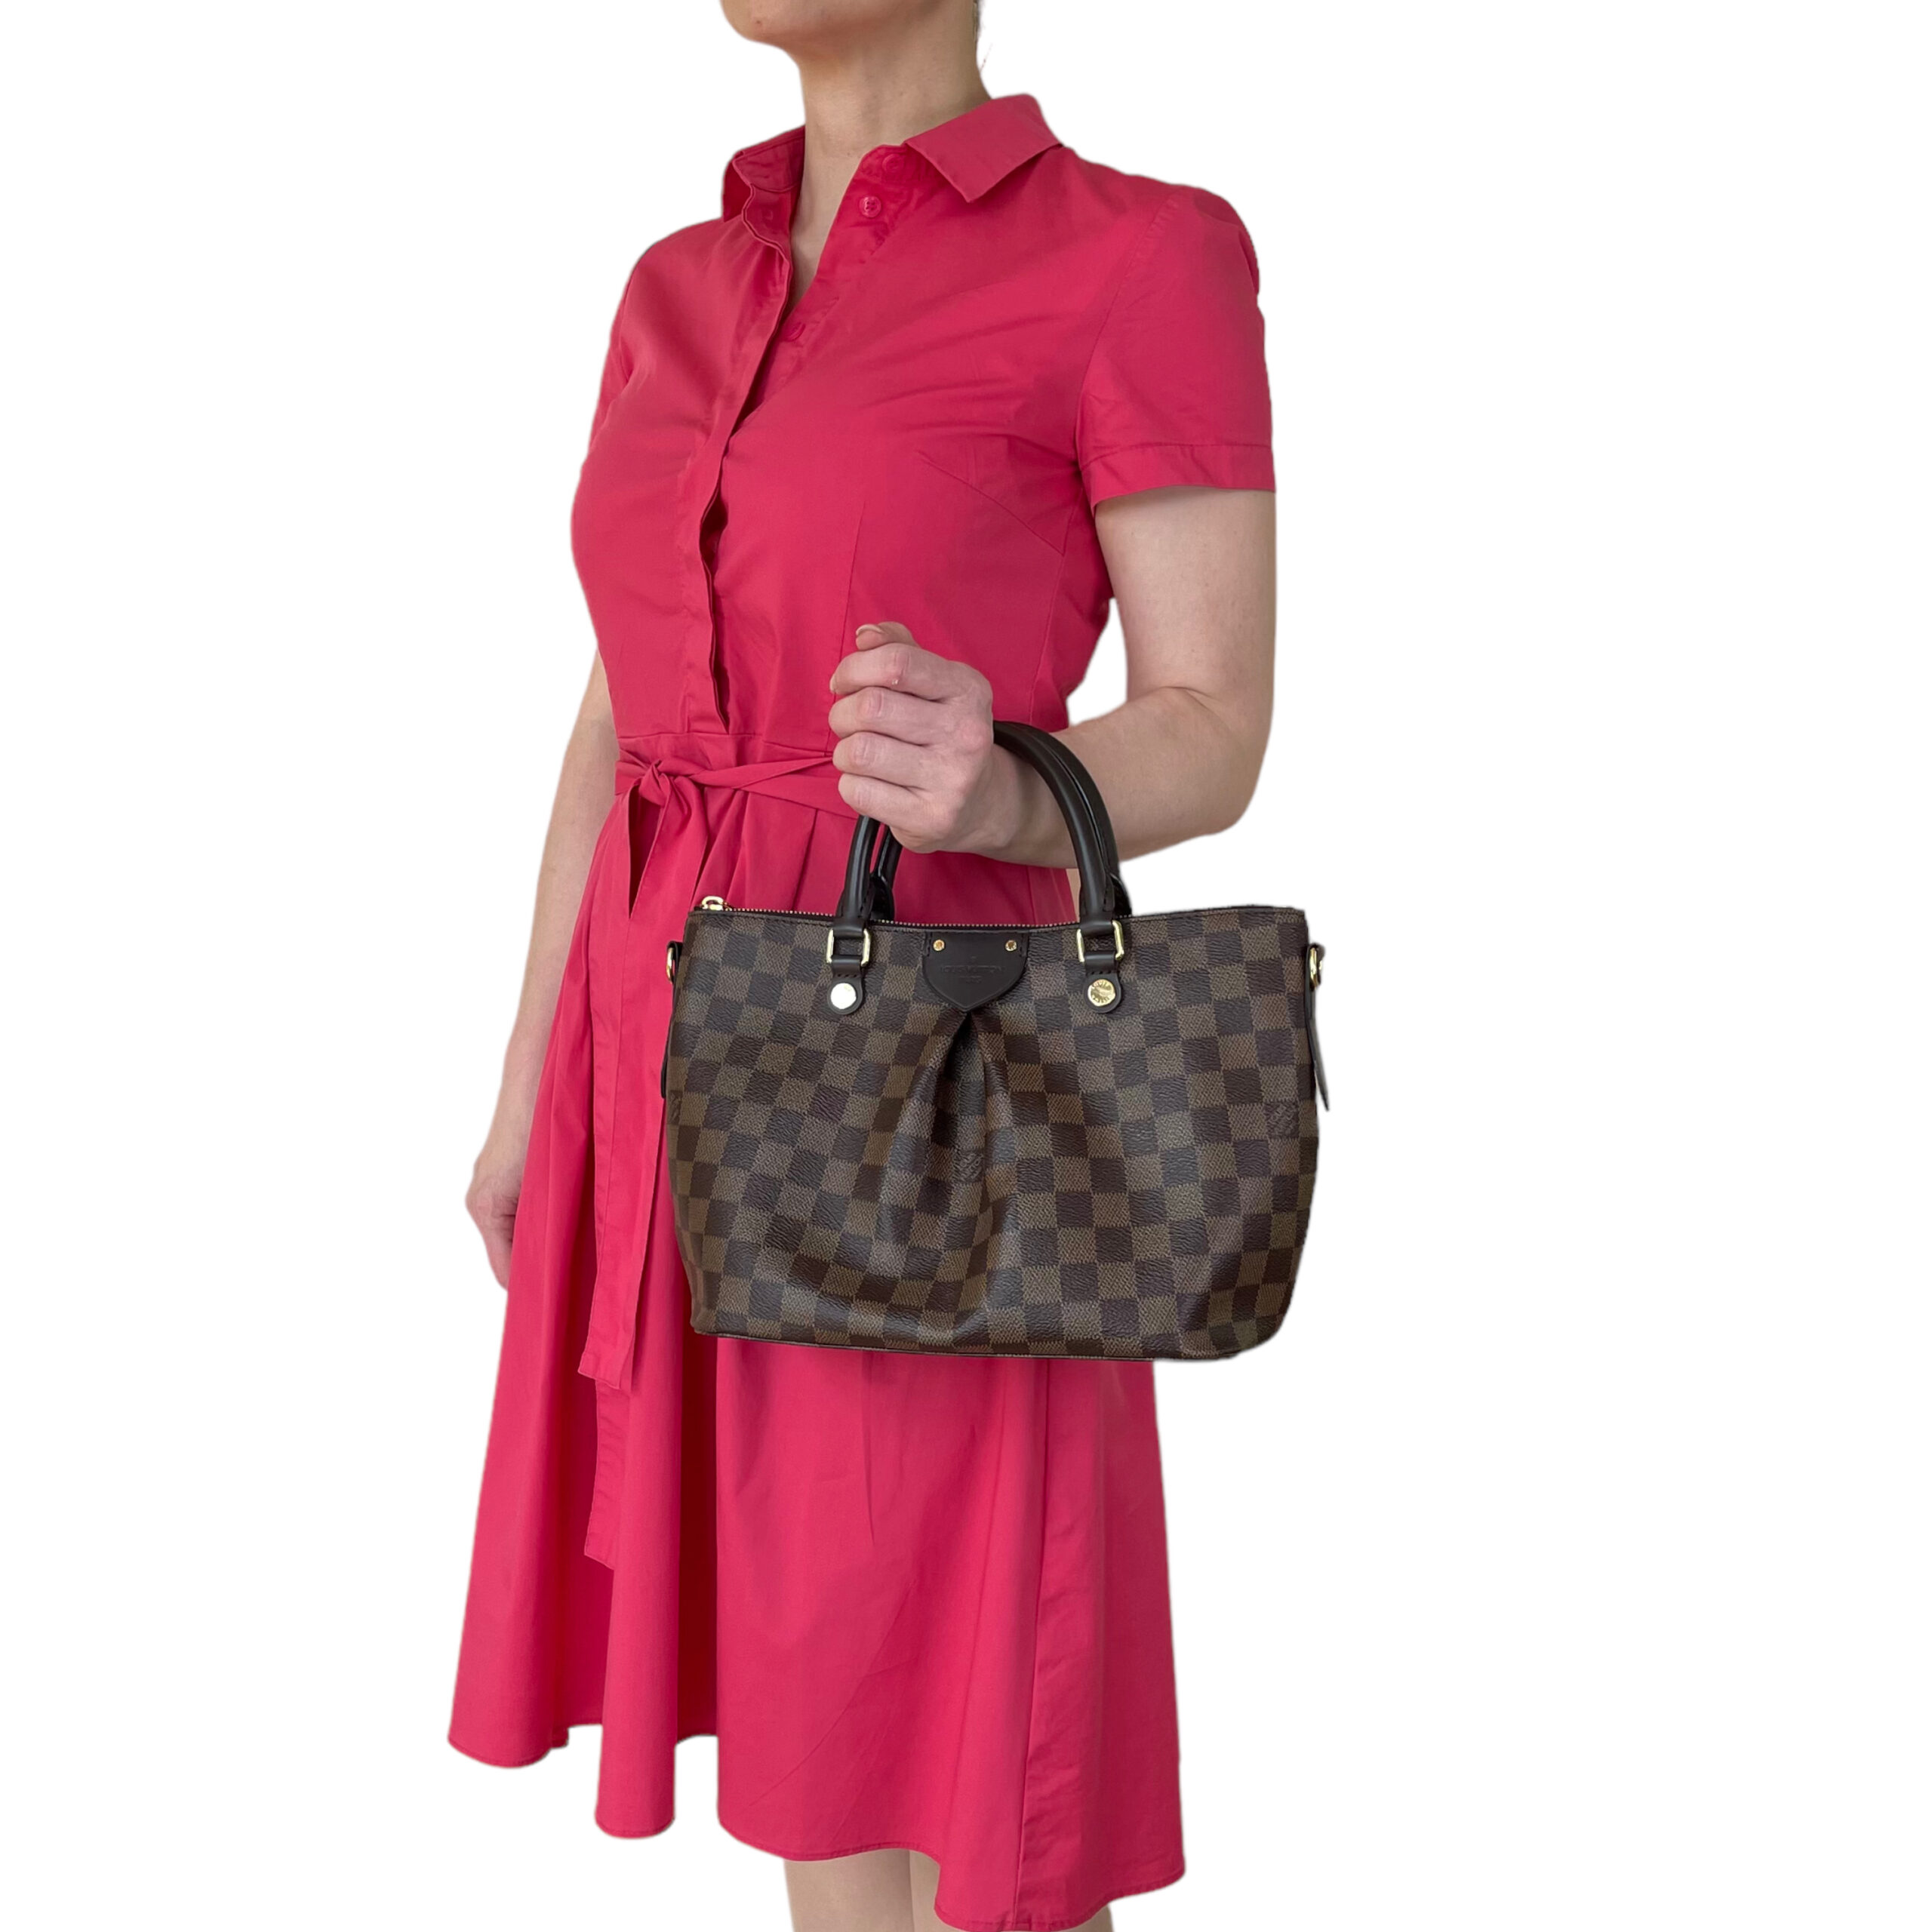 Louis Vuitton Siena PM Damier Ebene - I Love Handbags